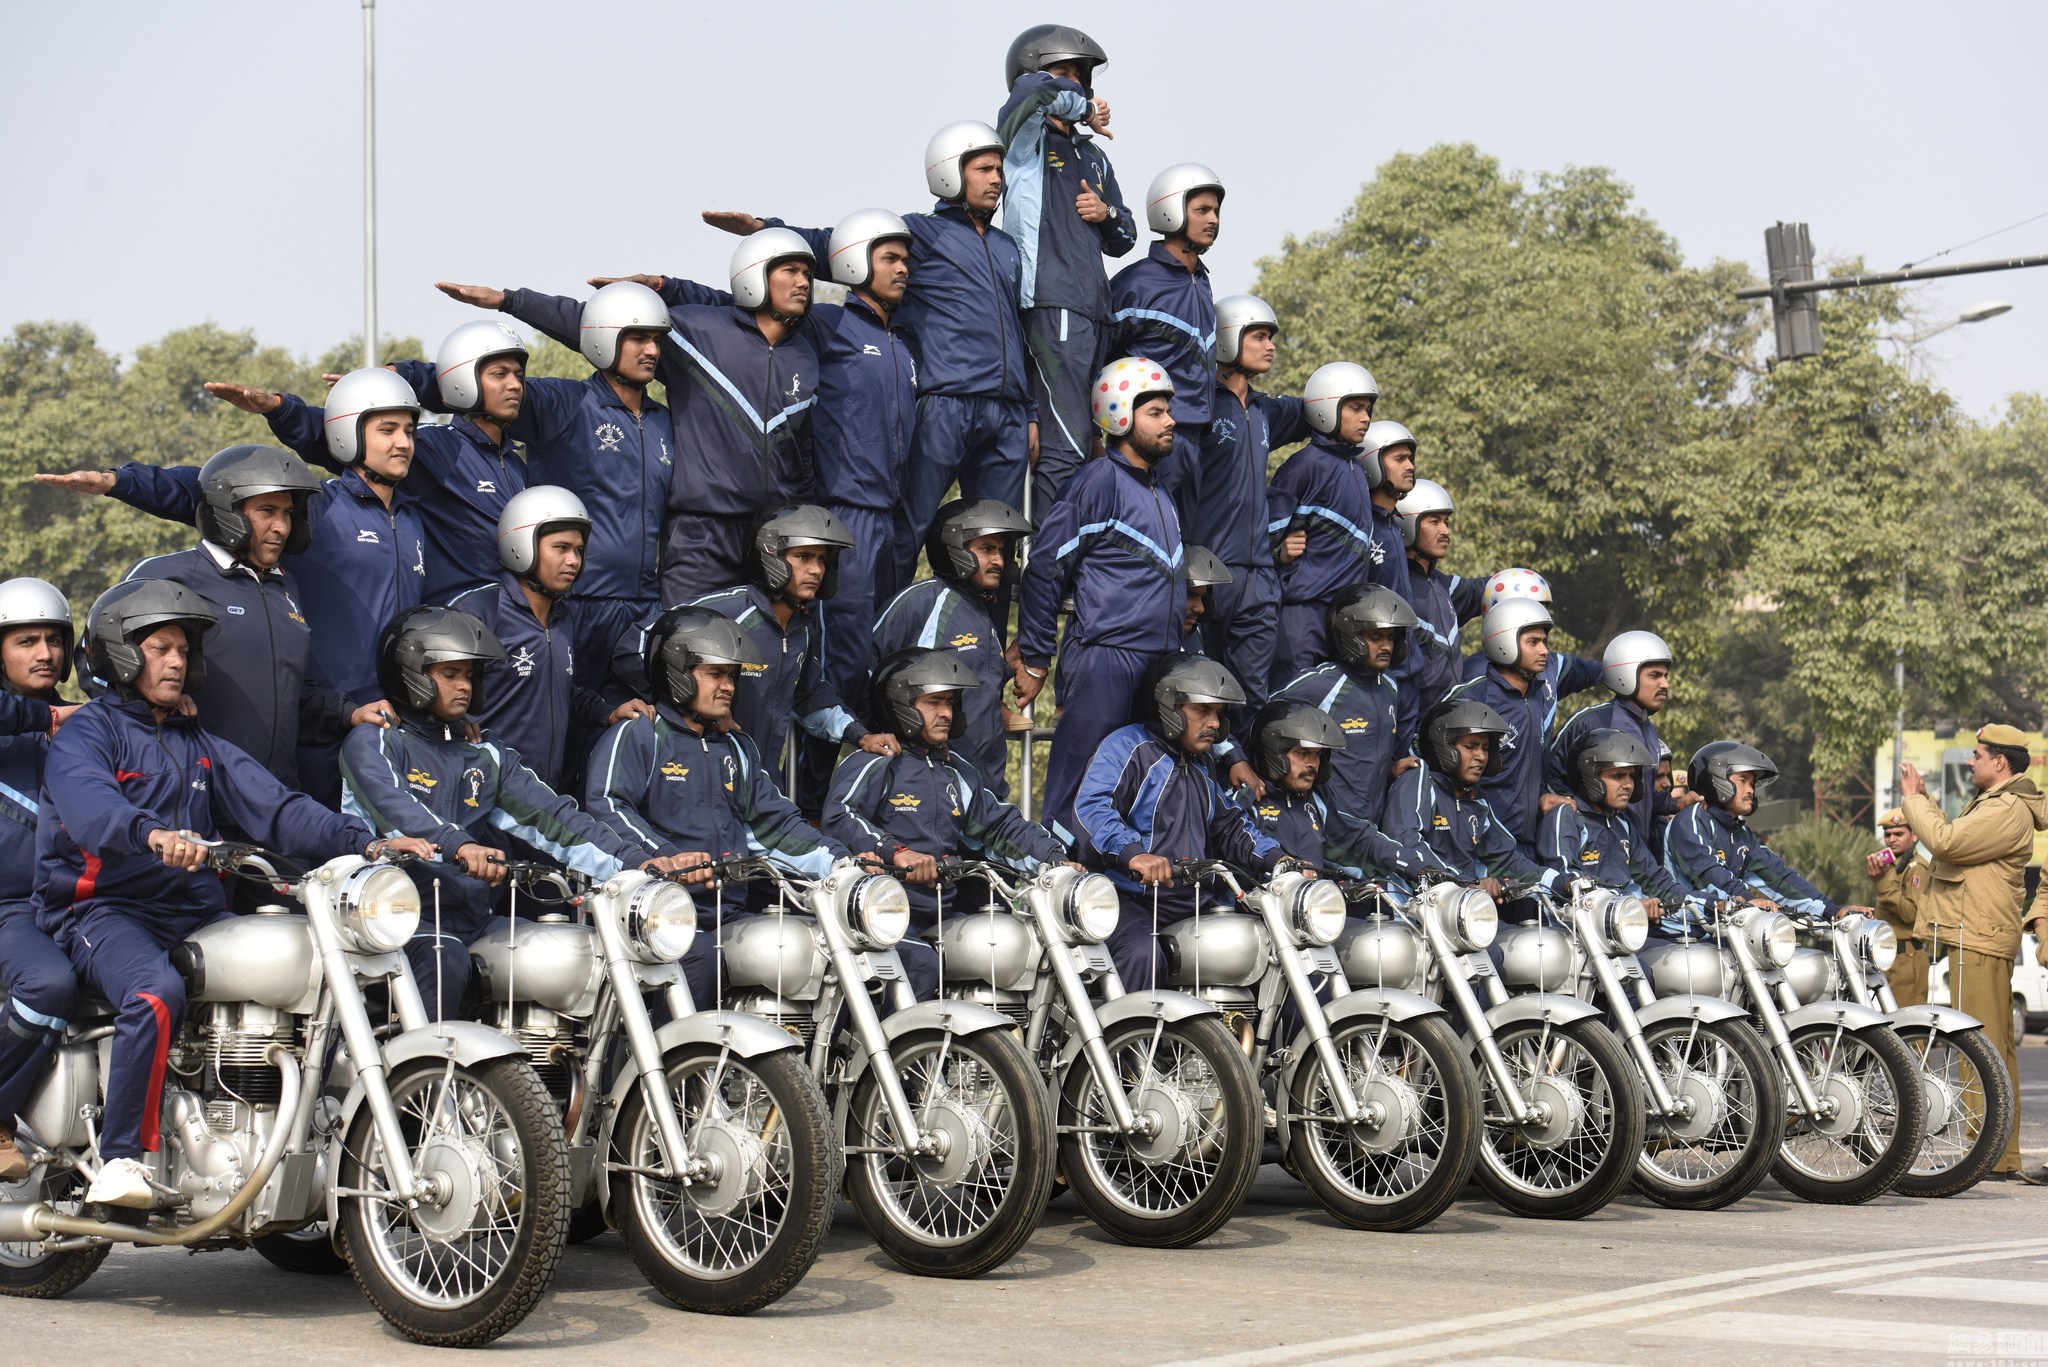 印度举行阅兵彩排 士兵再秀摩托车特技 - AcFun弹幕视频网 - 认真你就输啦 (?ω?)ノ- ( ゜- ゜)つロ